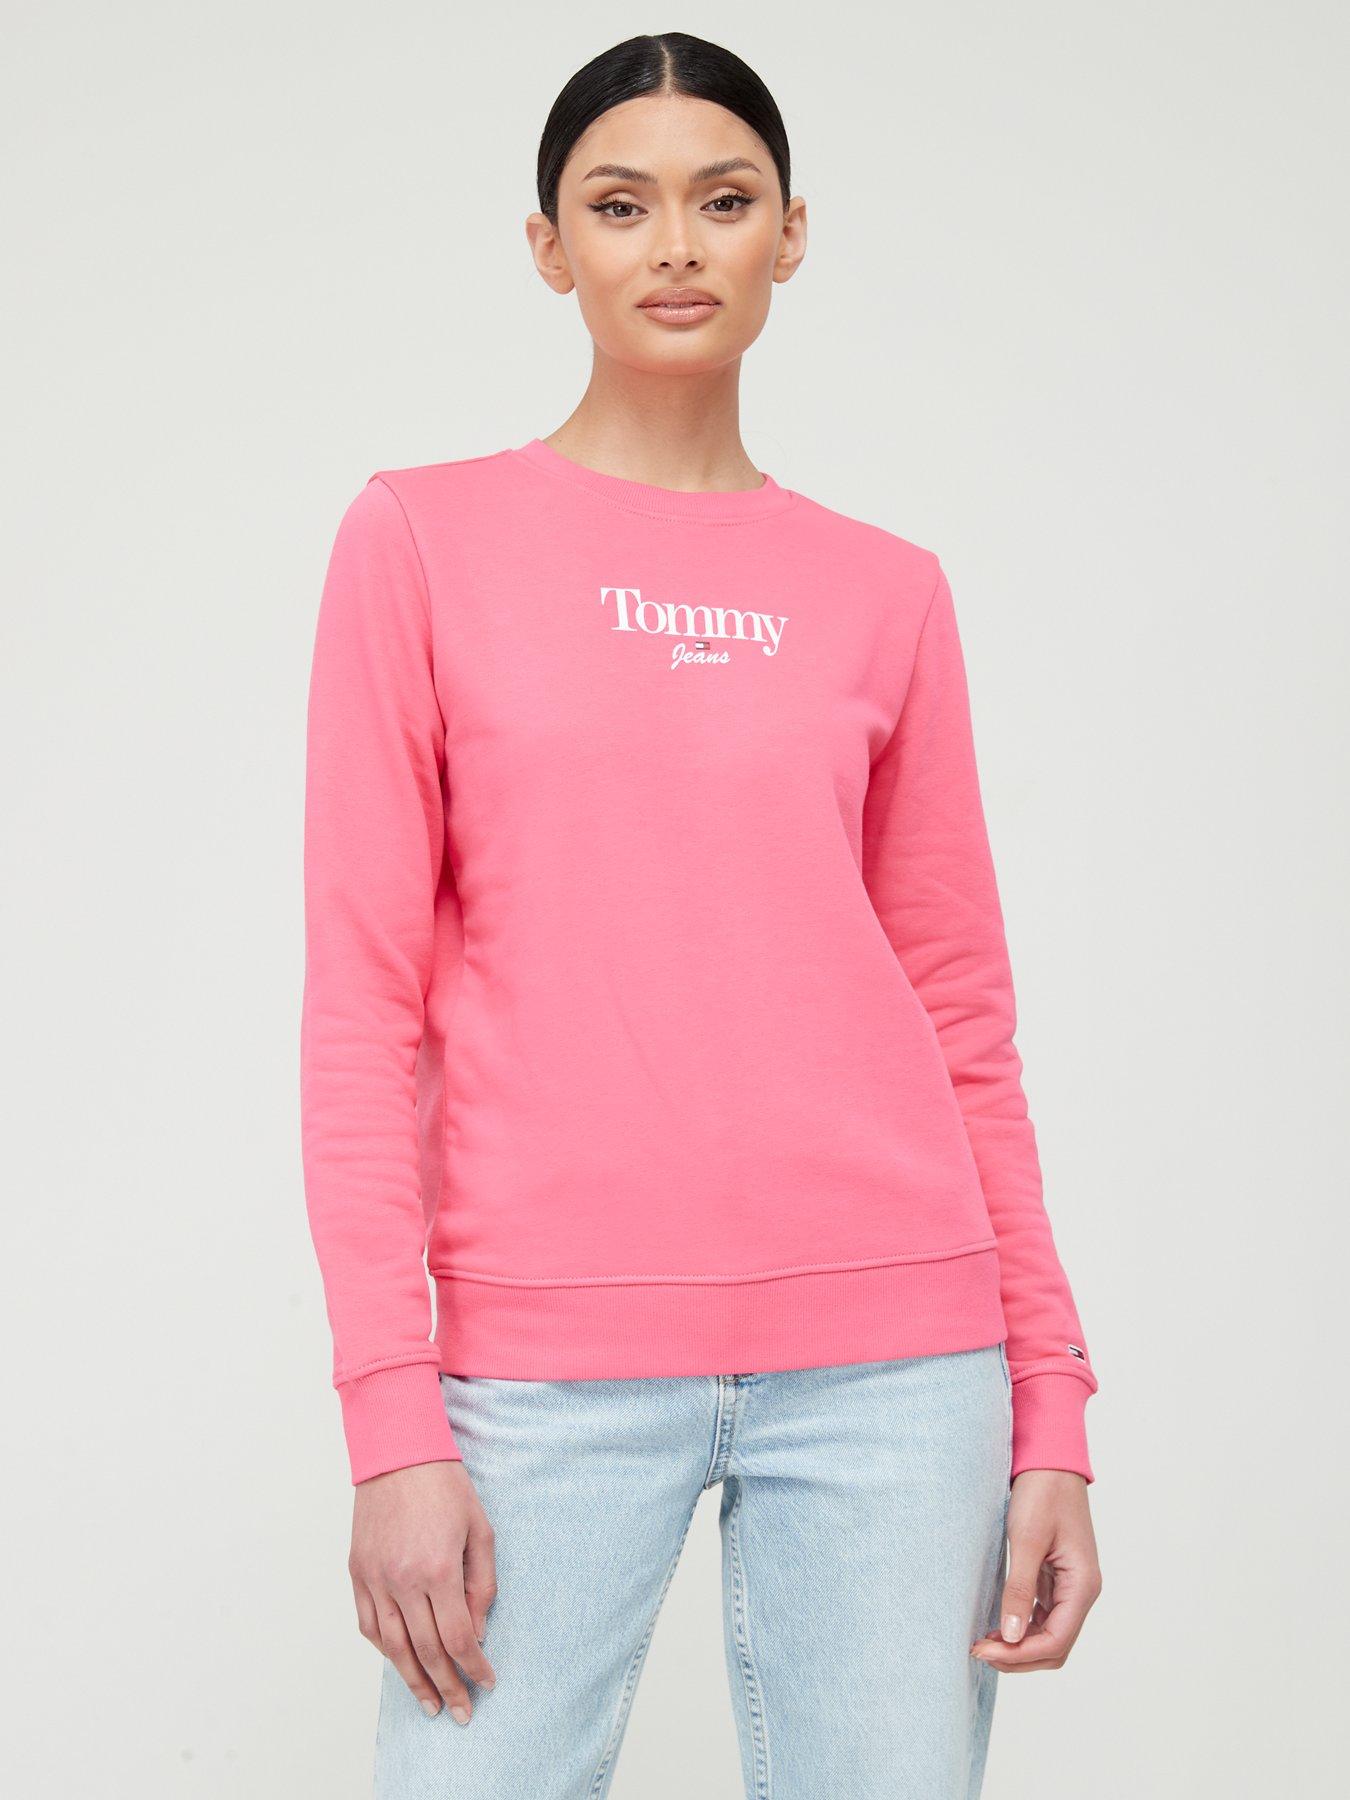 WOMEN FASHION Jumpers & Sweatshirts Hoodless Red M Tommy Hilfiger sweatshirt discount 71% 